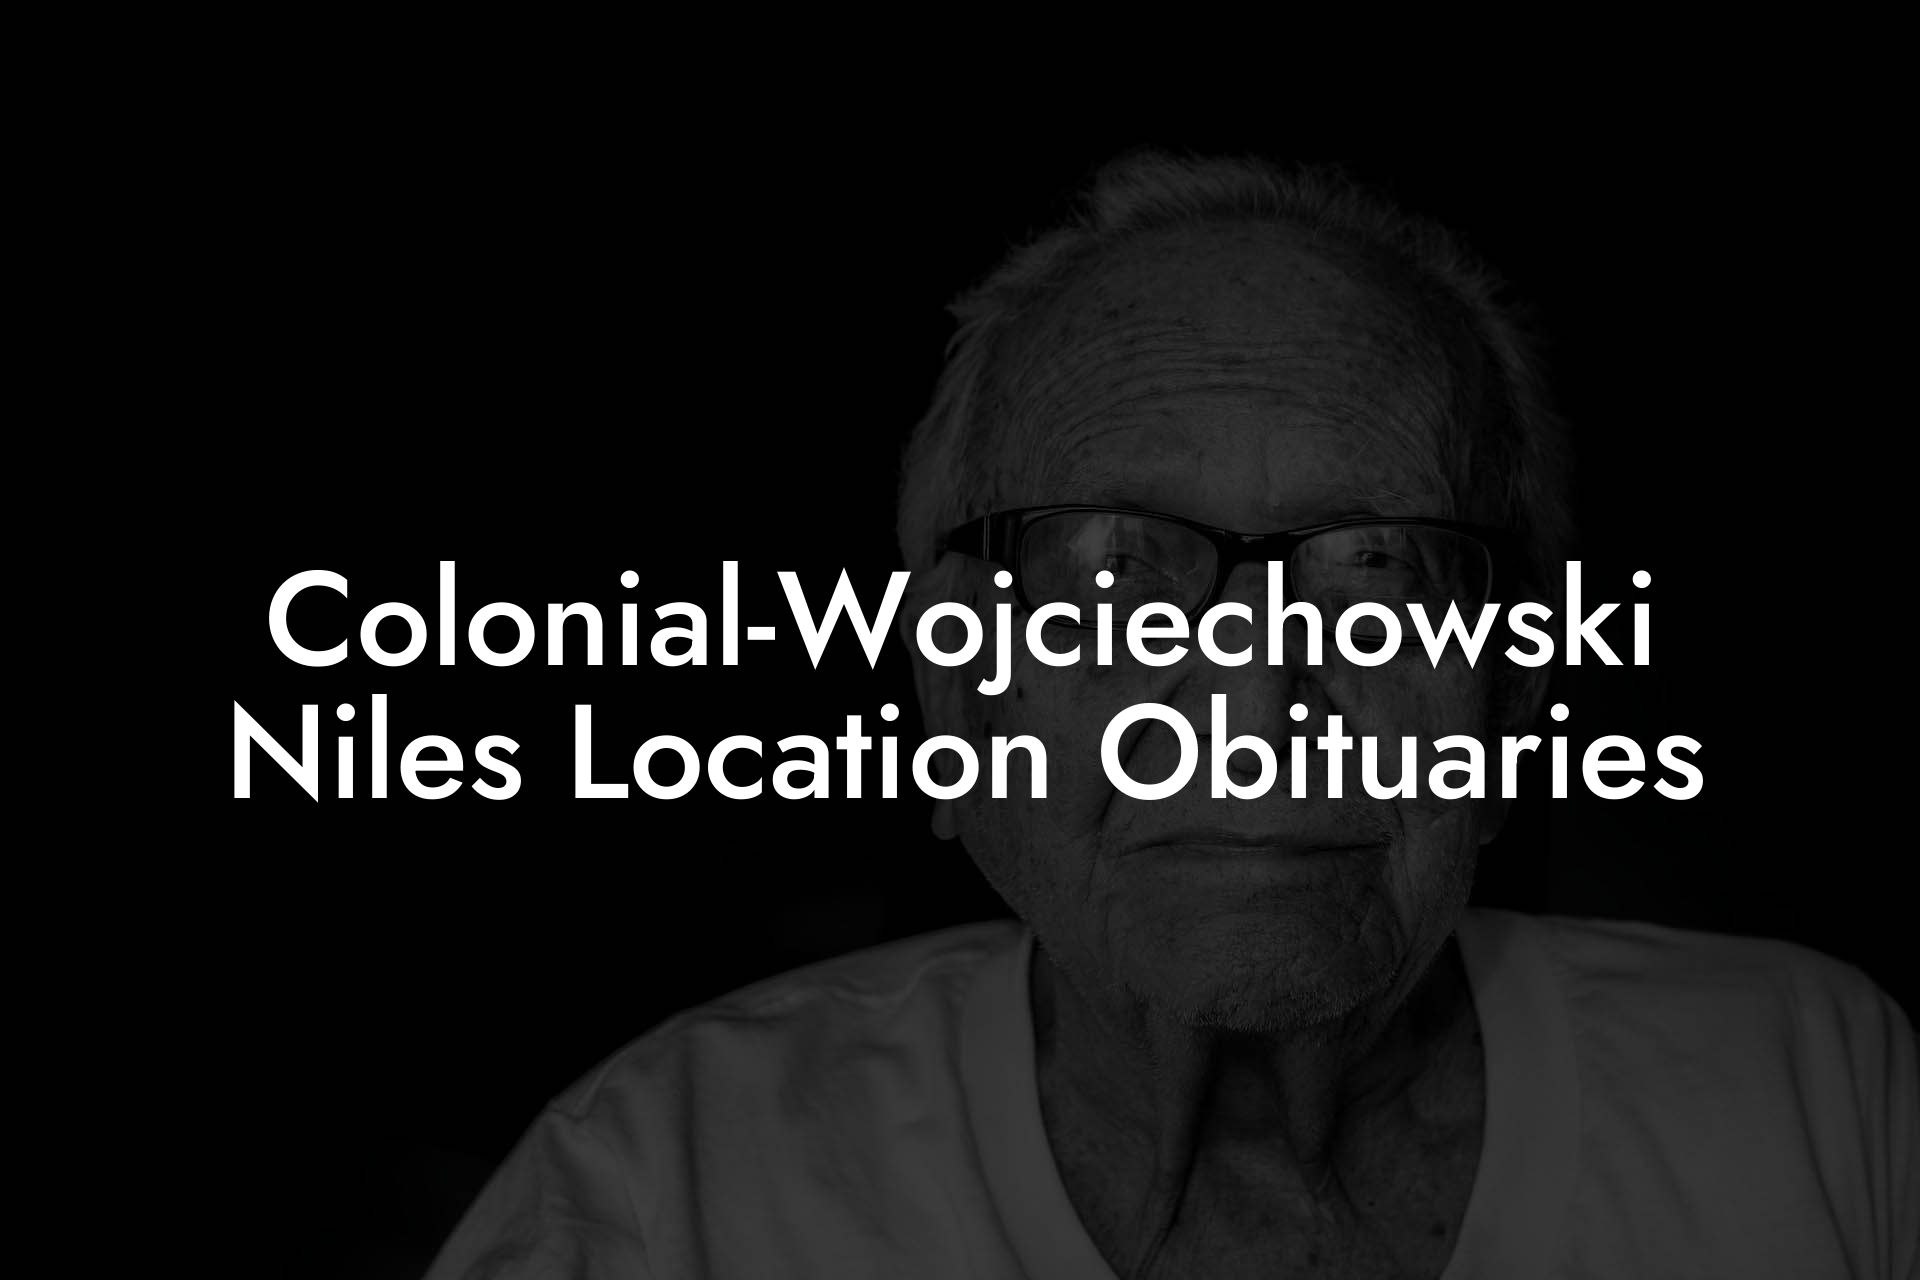 Colonial-Wojciechowski Niles Location Obituaries